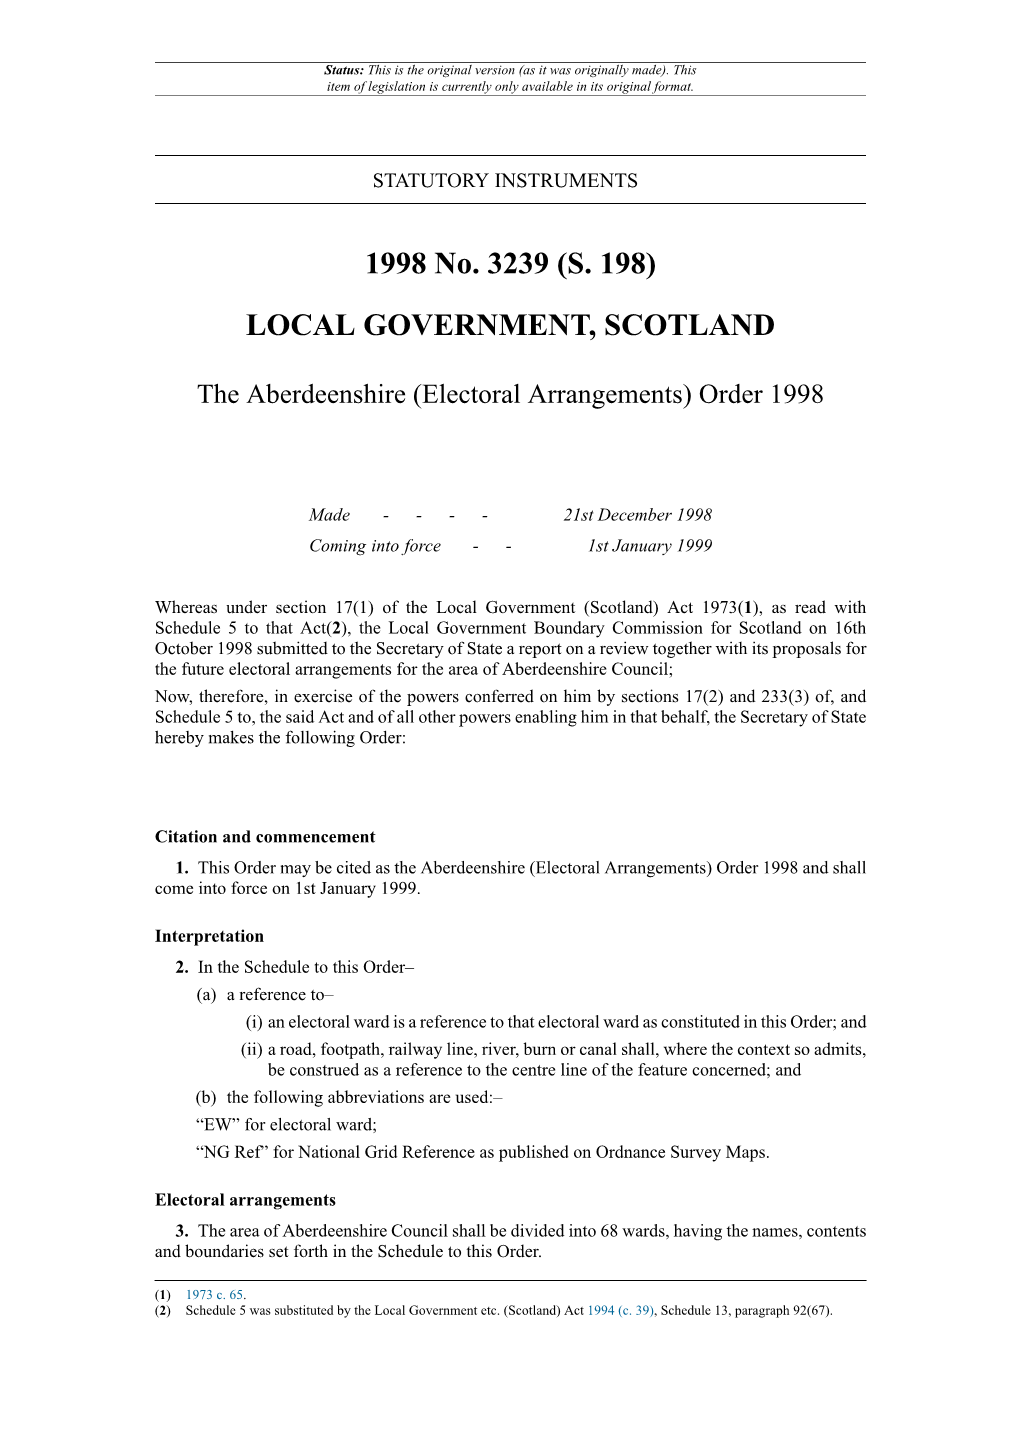 The Aberdeenshire (Electoral Arrangements) Order 1998